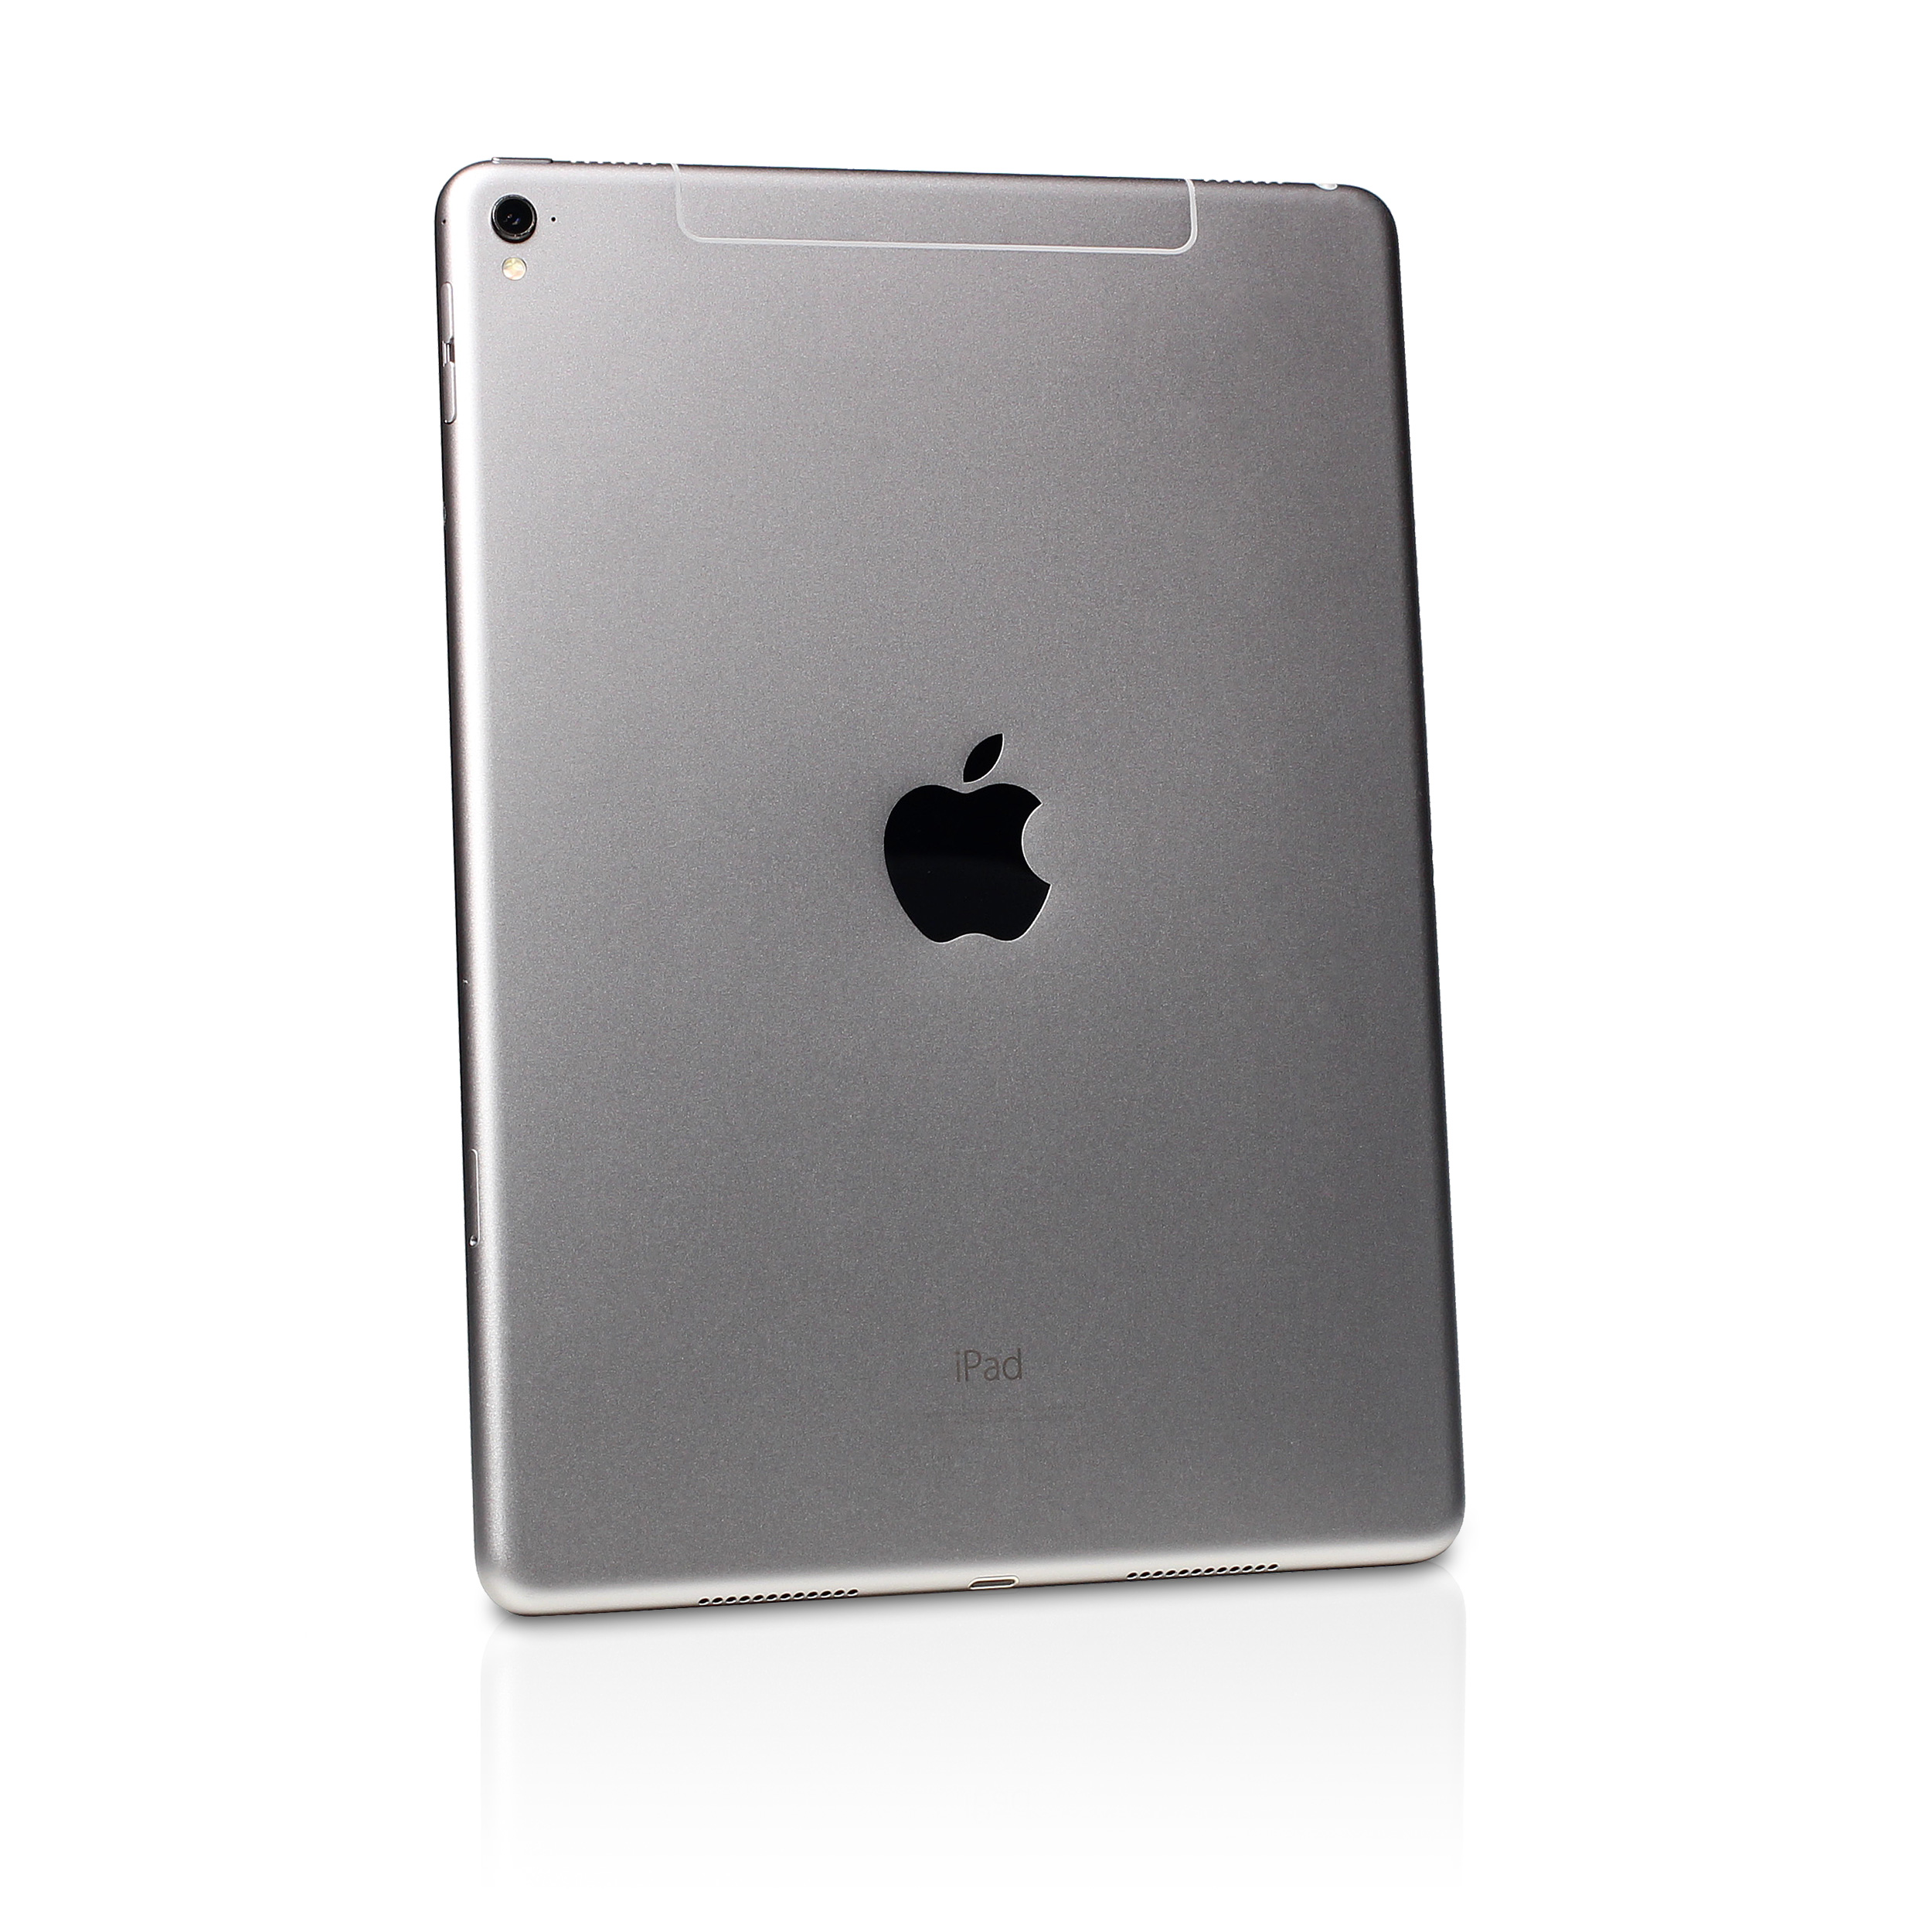 Apple, Inc. iPad Pro 9.7-inch Wi-Fi+Cellular 32GB Space Gray